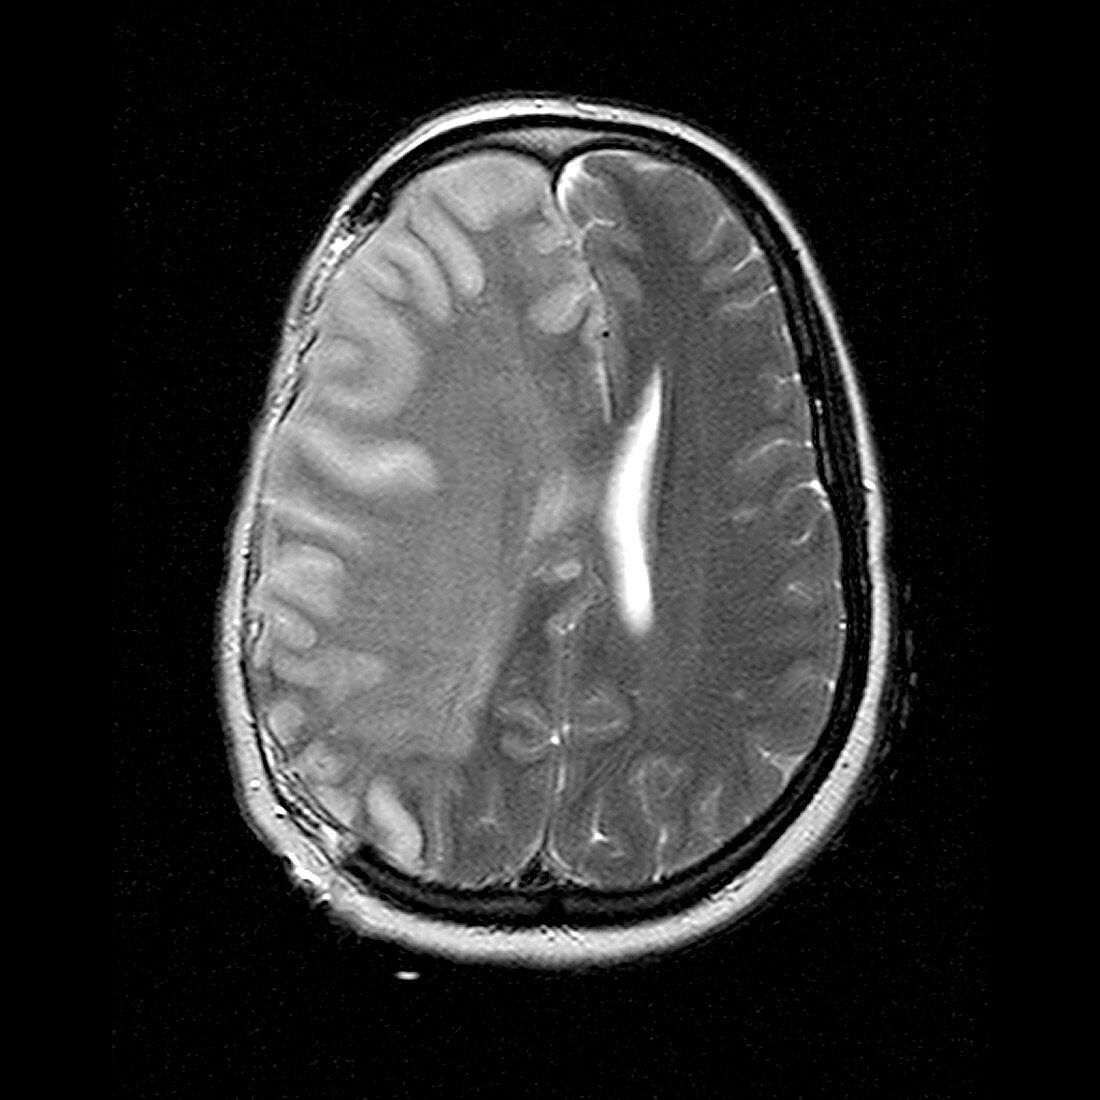 Stroke,MRI scan